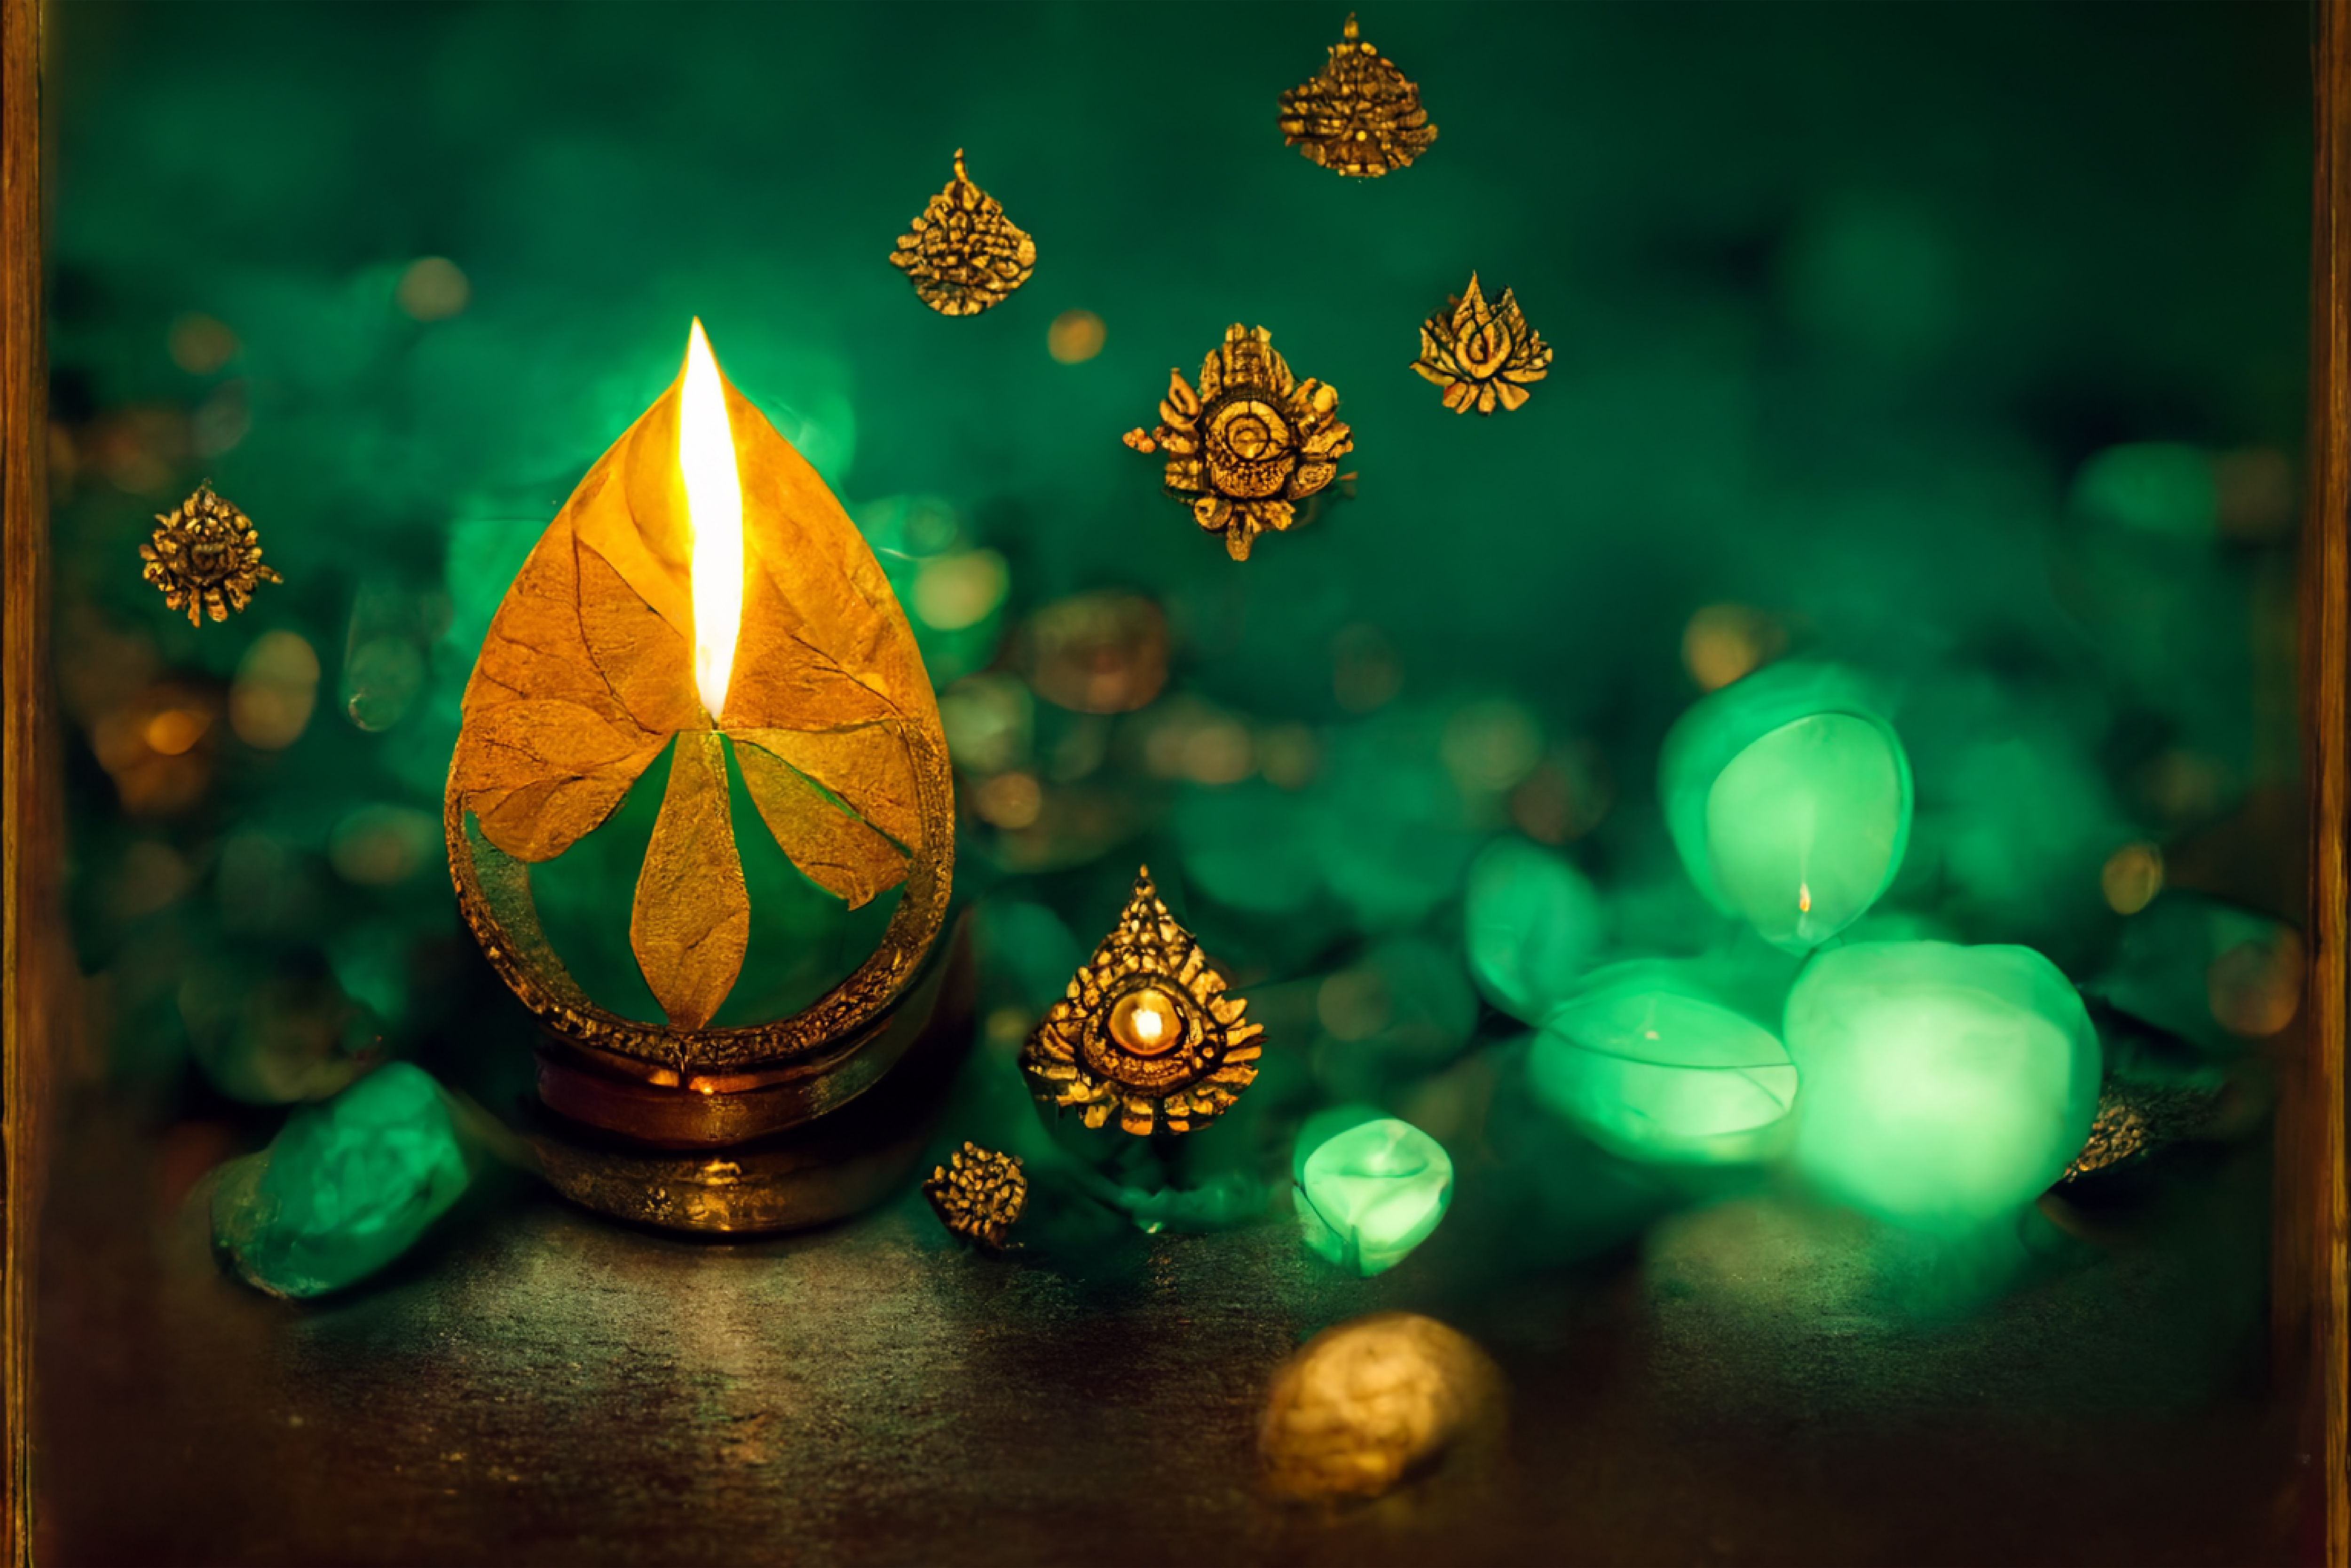 Free Green Diwali Background with Golden Diya Lamp Image